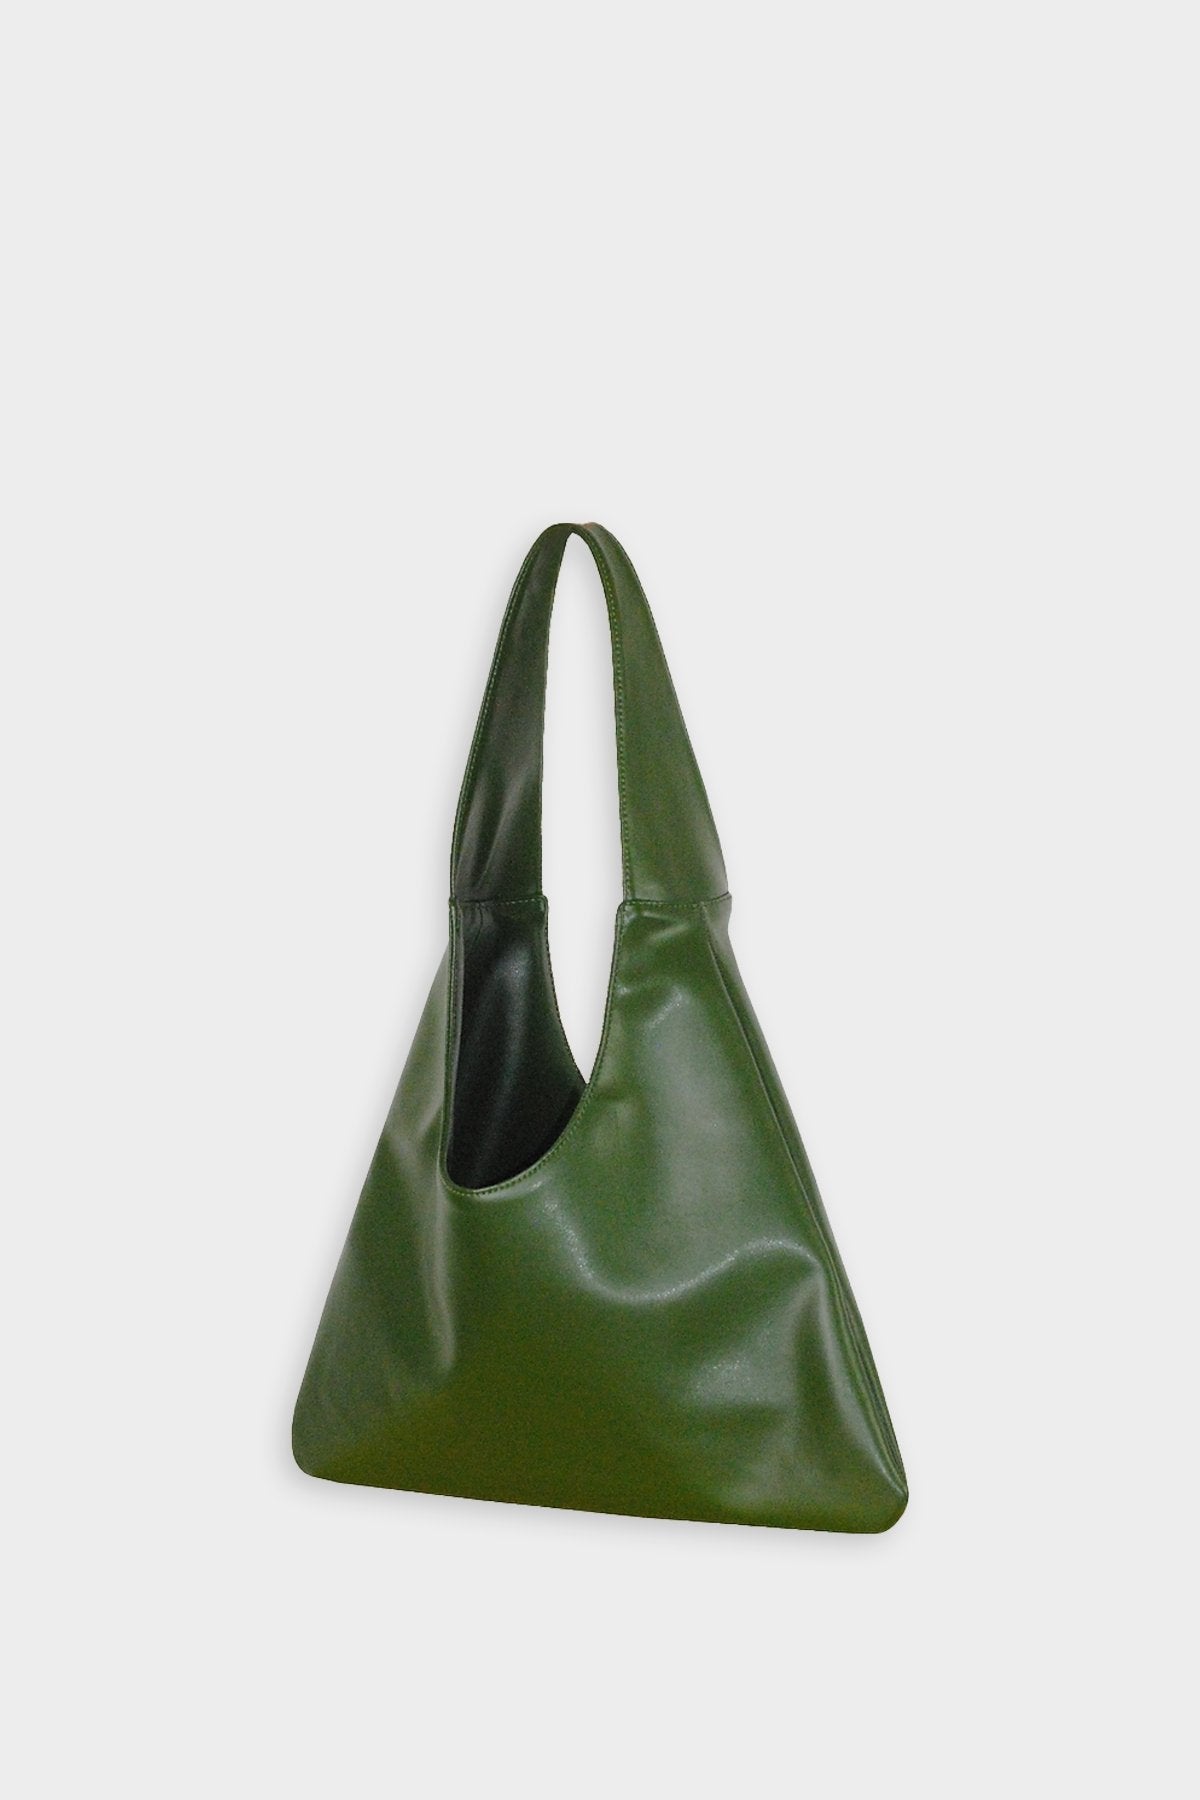 Agave Triangular Tote Bag in Green - shop-olivia.com